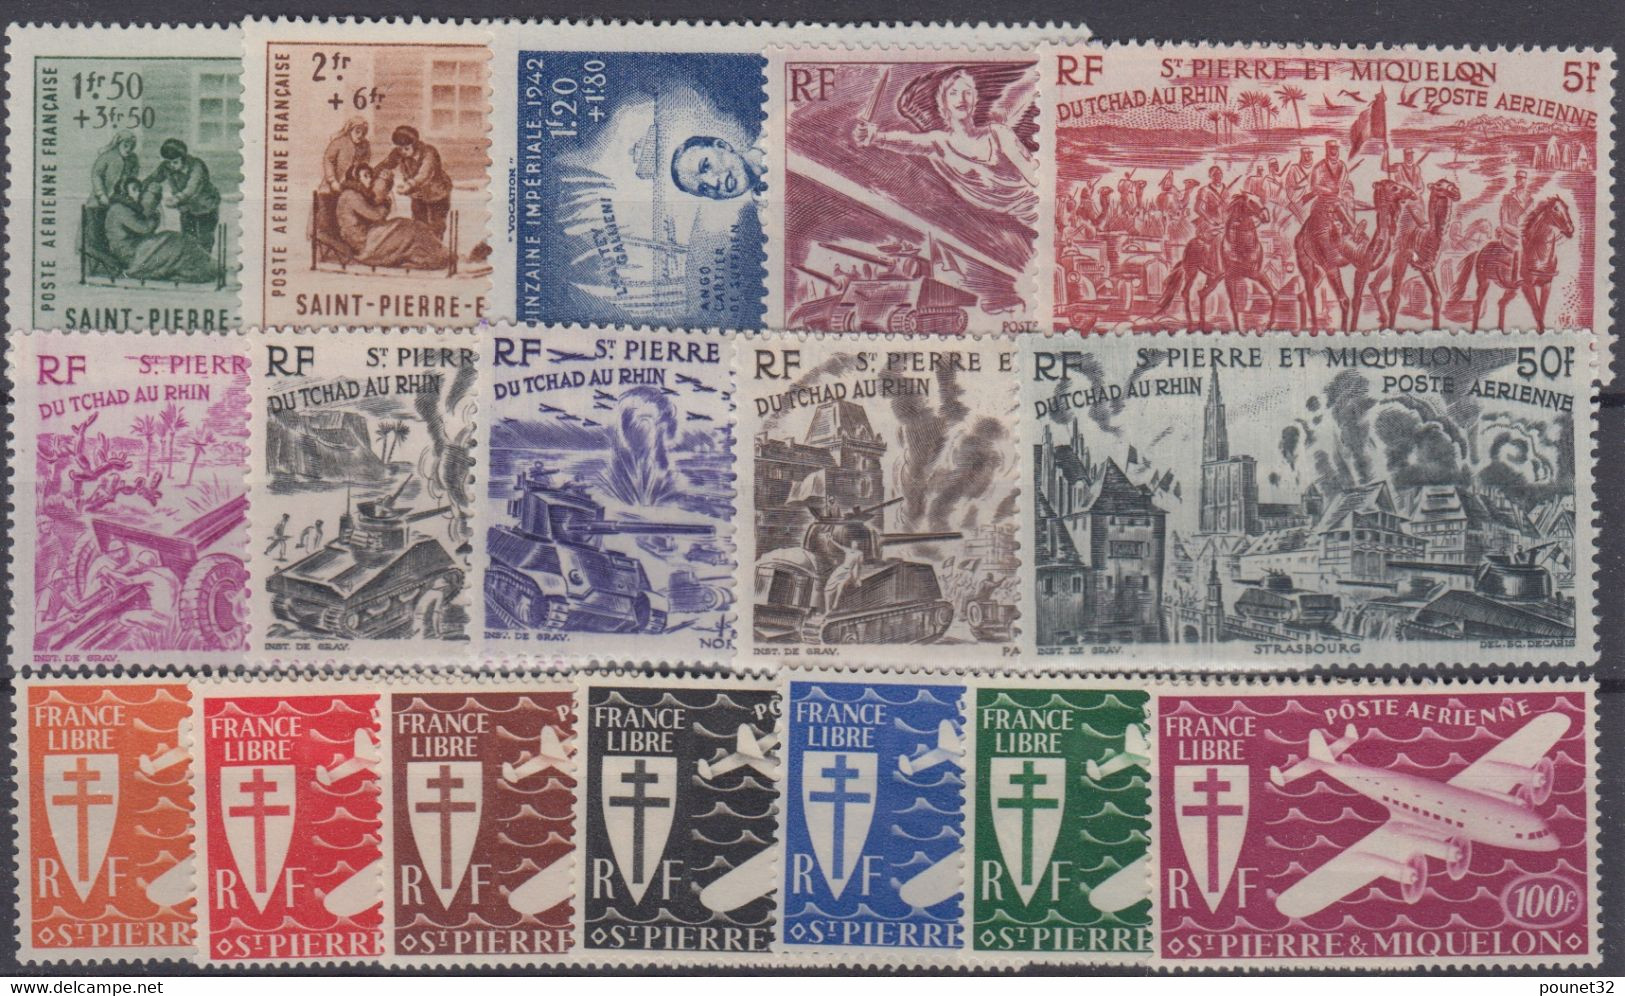 SAINT PIERRE & MIQUELON : POSTE AERIENNE N° 1/14 NEUFS * GOMME AVEC CHARNIERE - Used Stamps